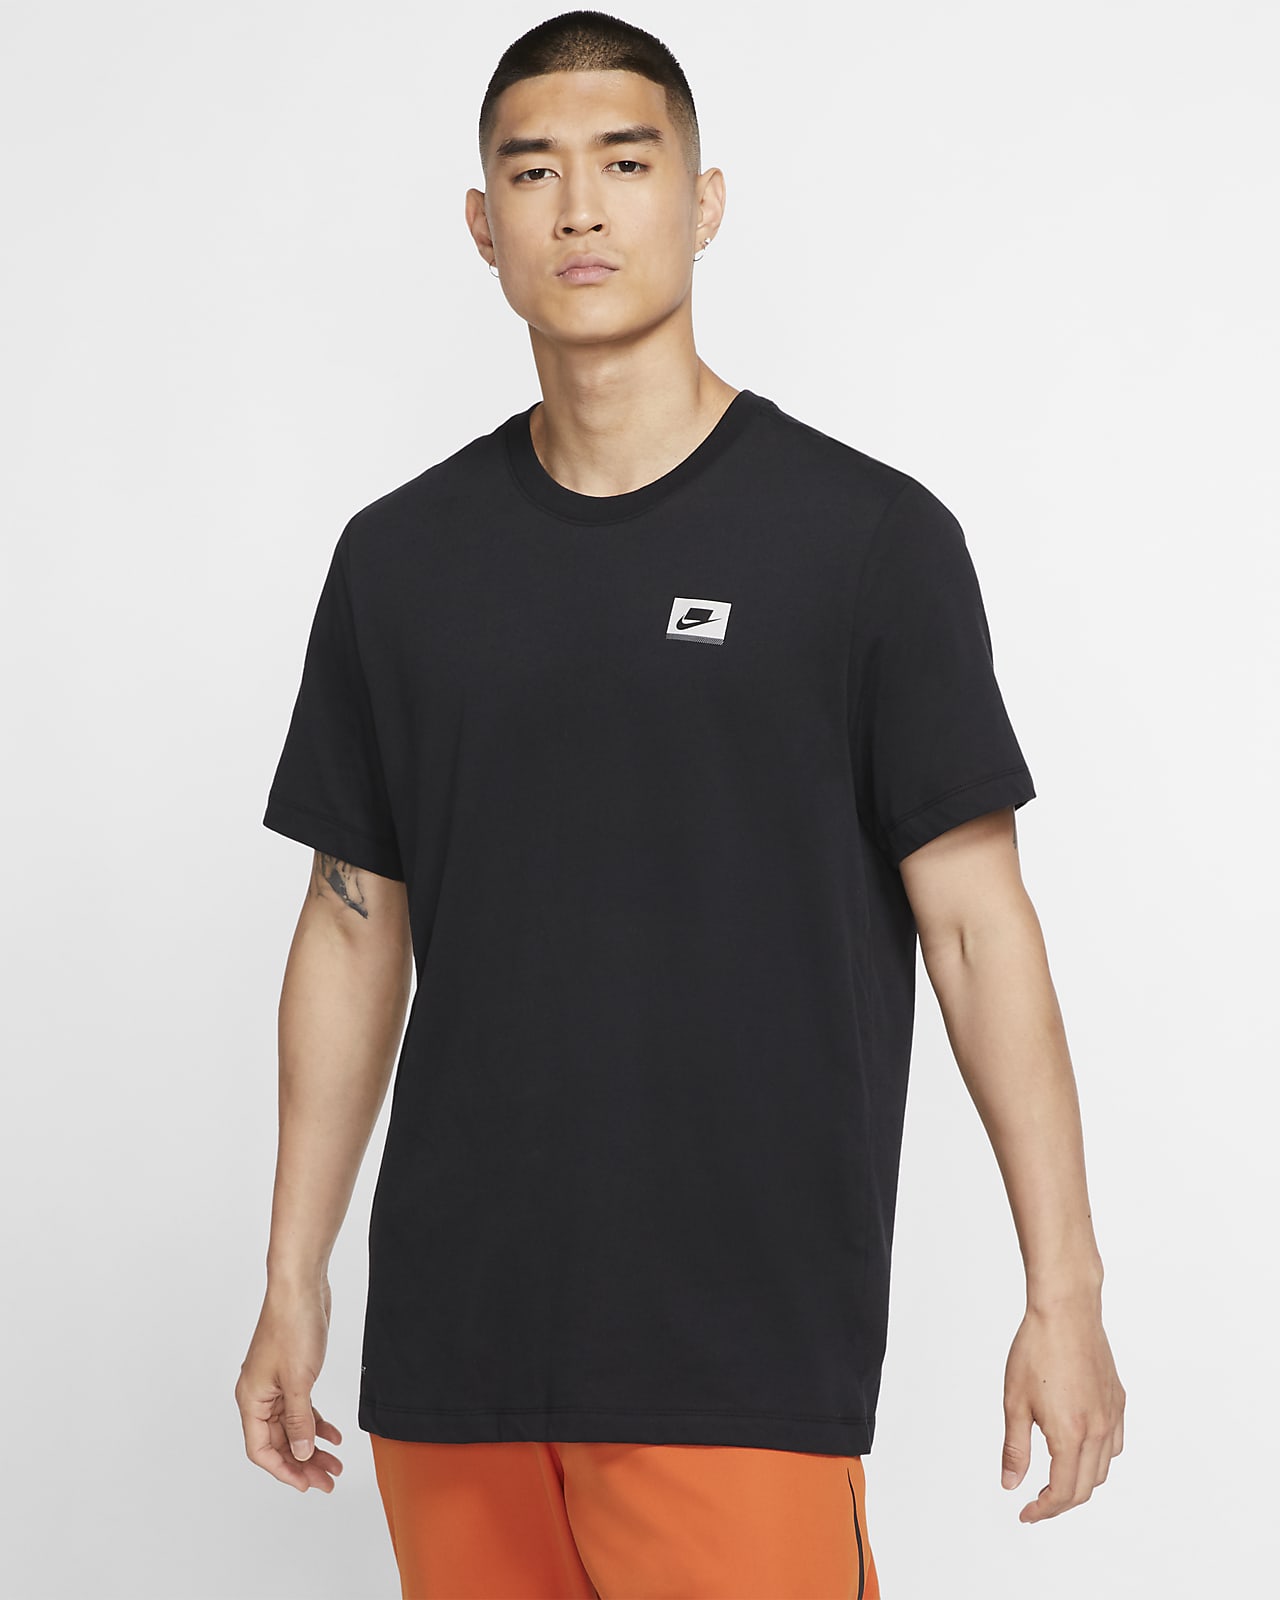 Nike Dri-FIT Trainings-T-Shirt für Herren